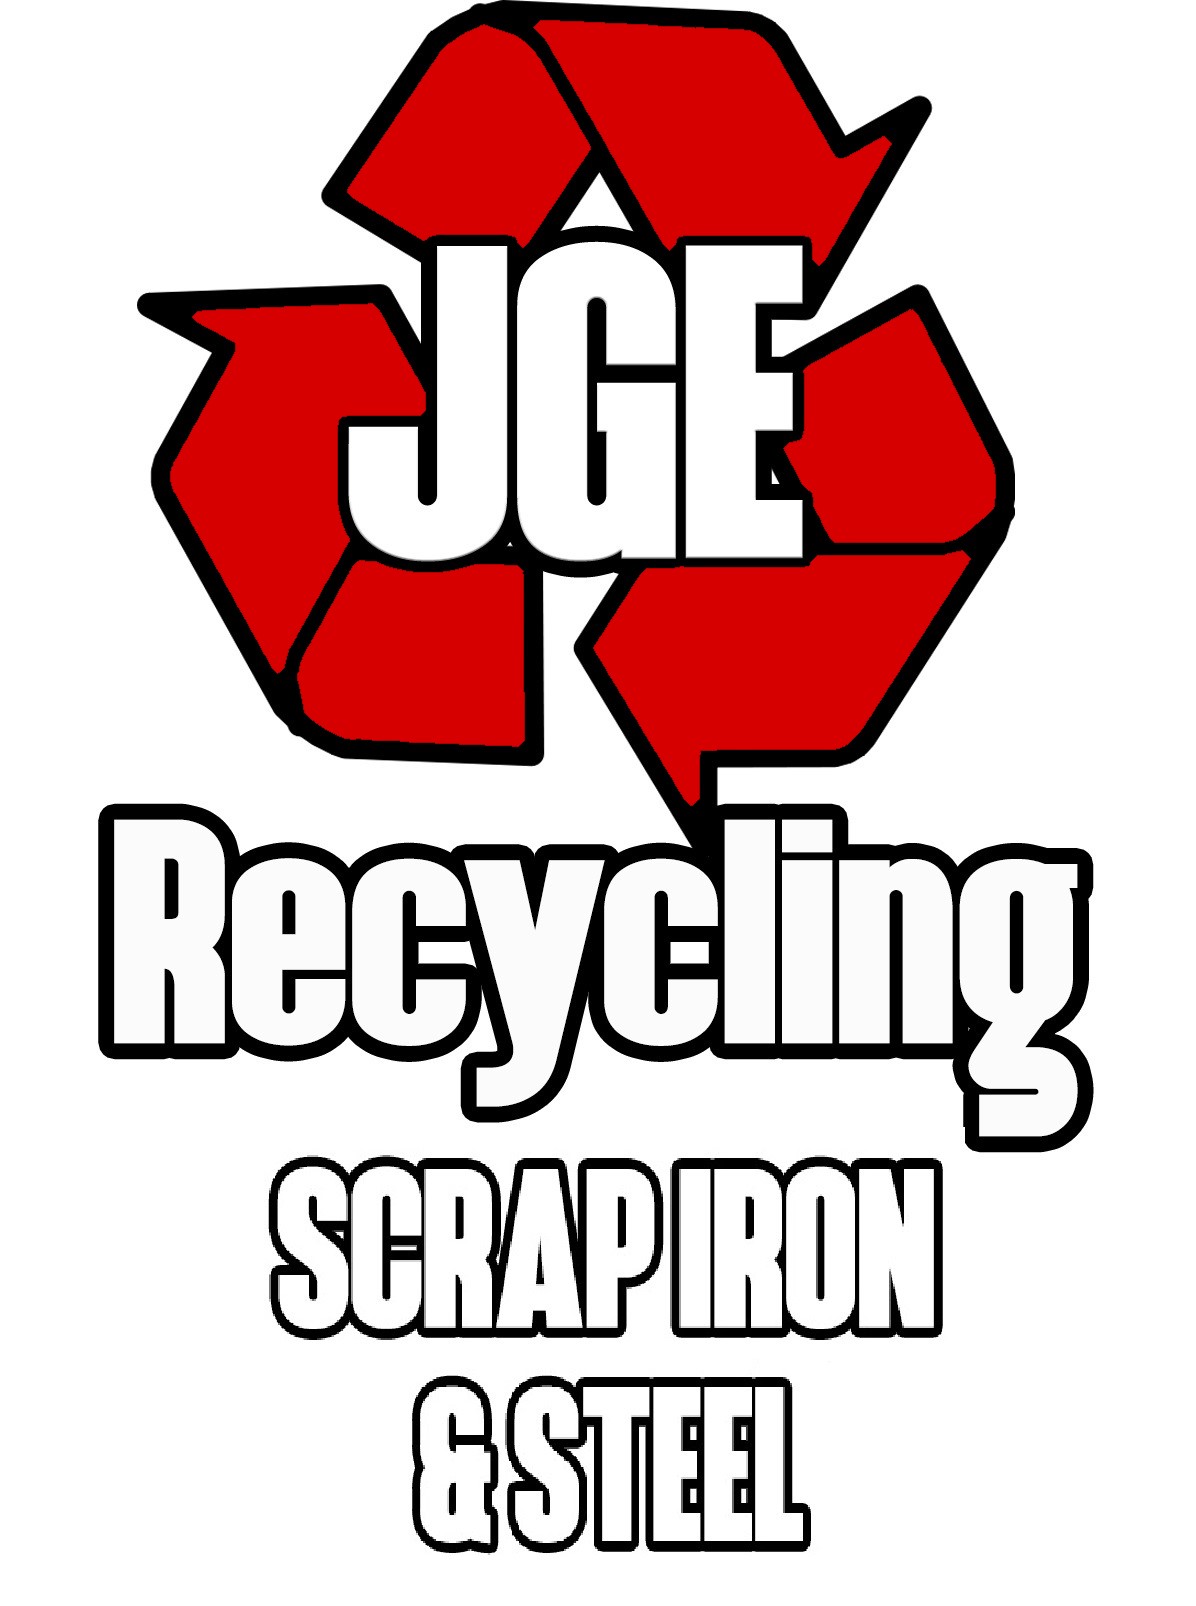 JGE Recycling